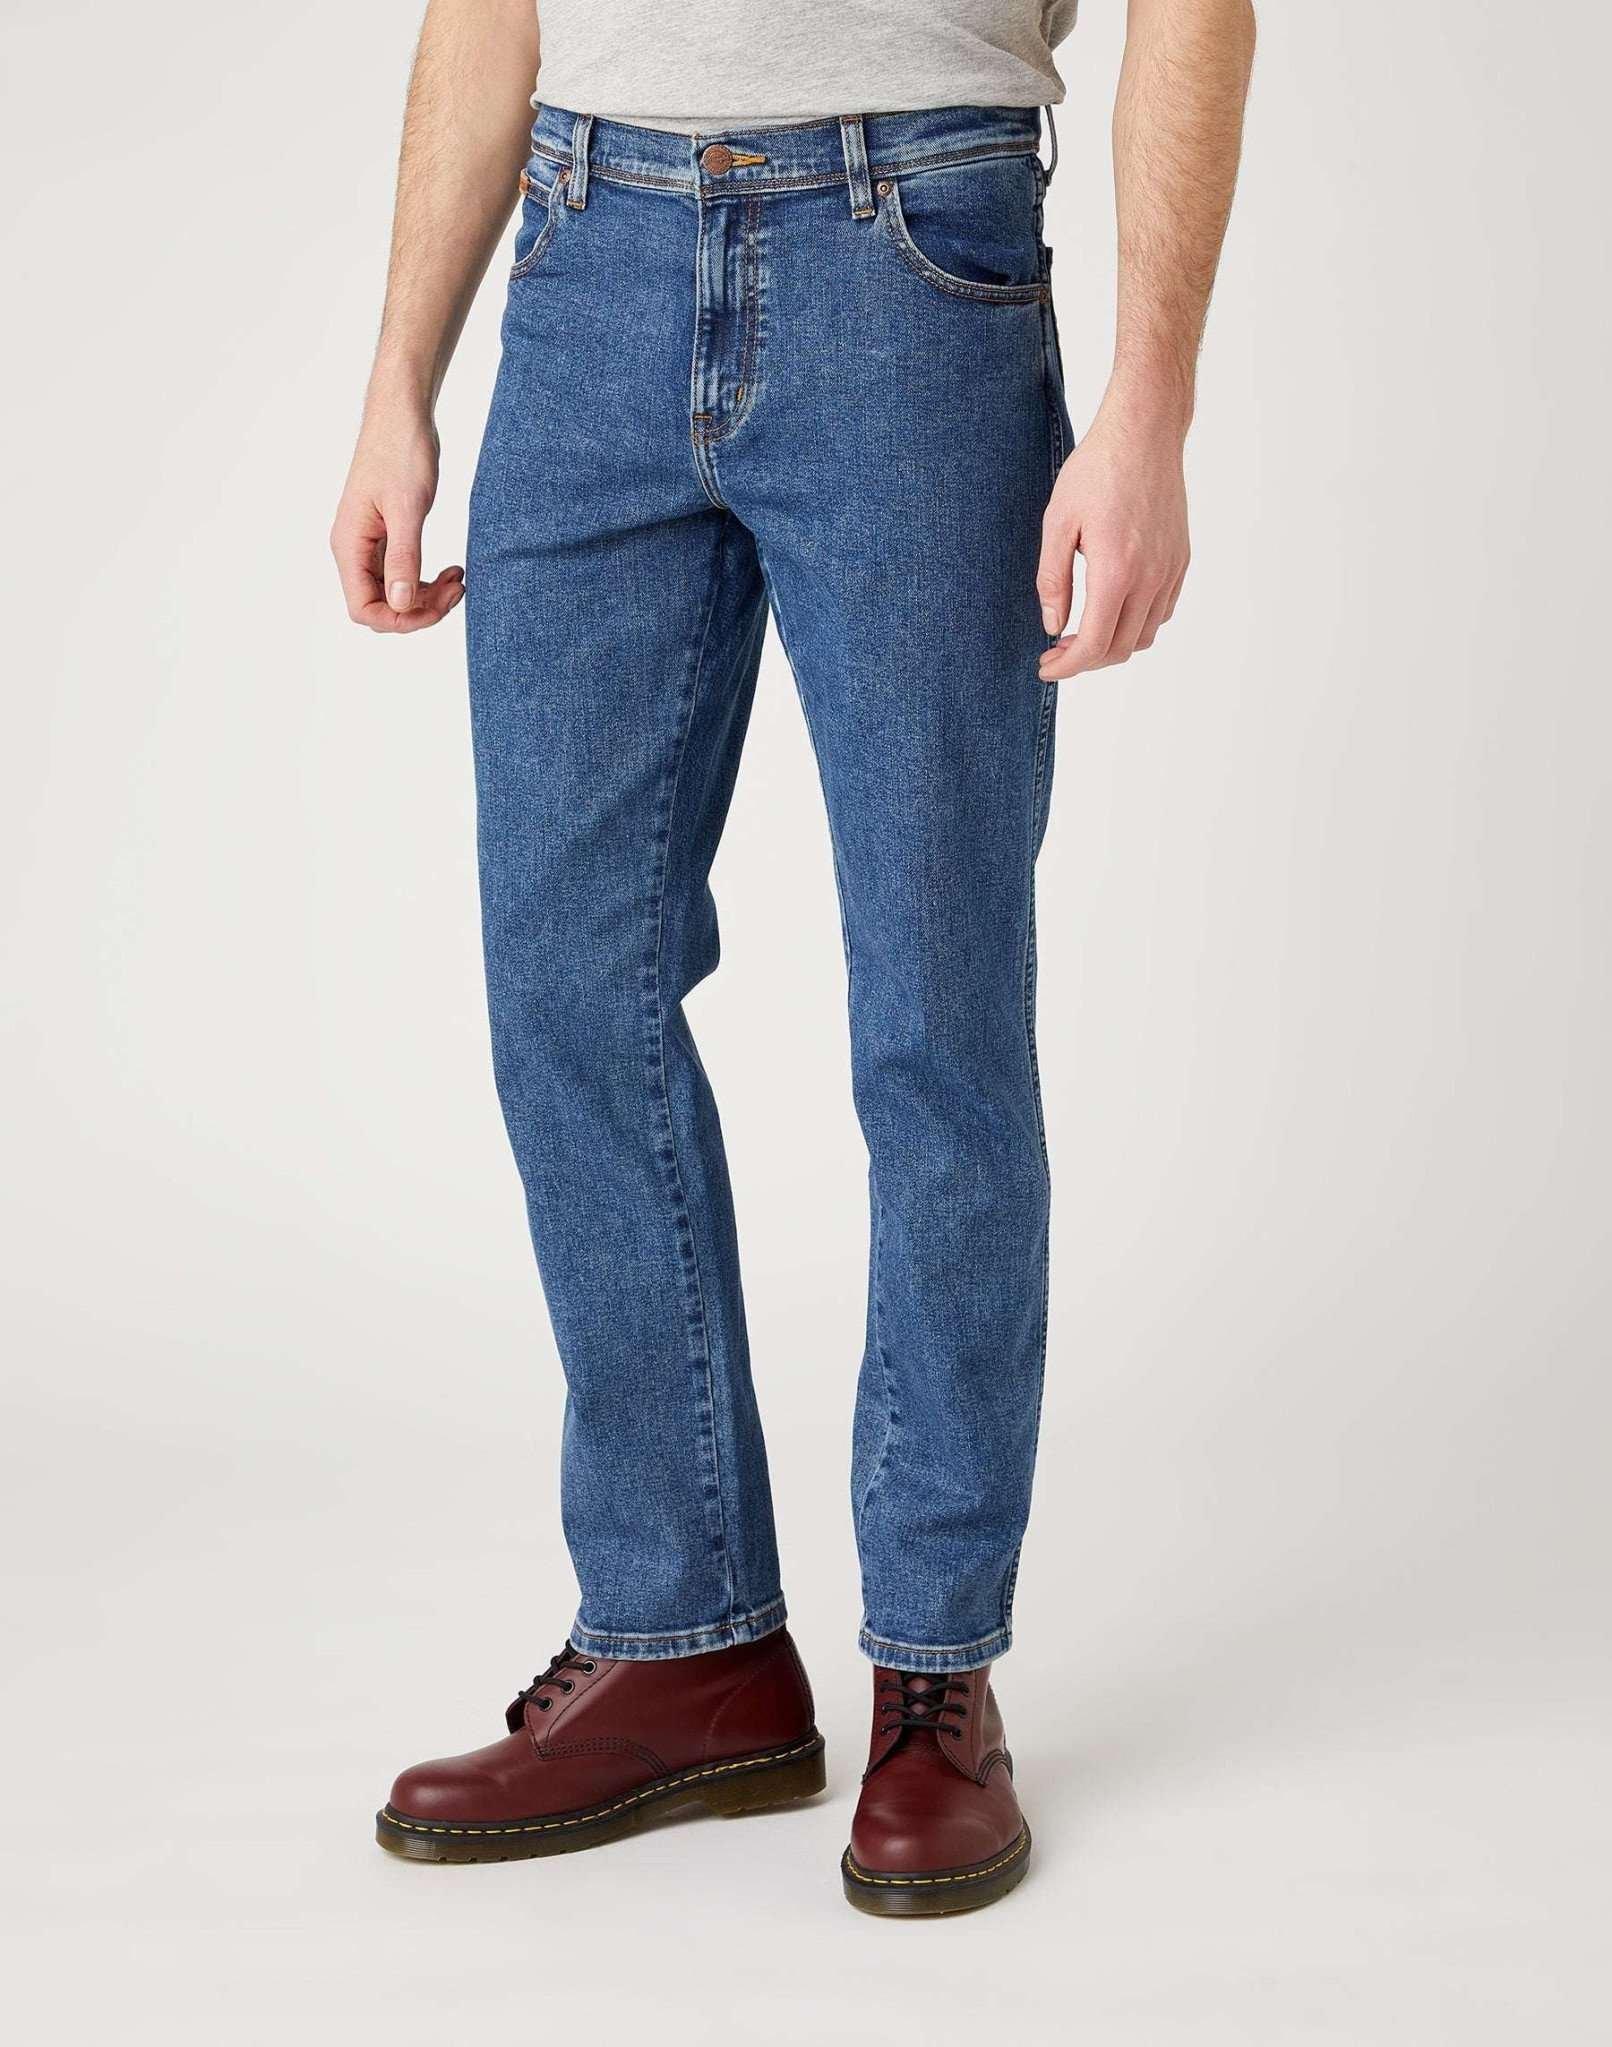 Jeans Straight Leg Texas Slim Herren Blau Denim L32/W36 von Wrangler